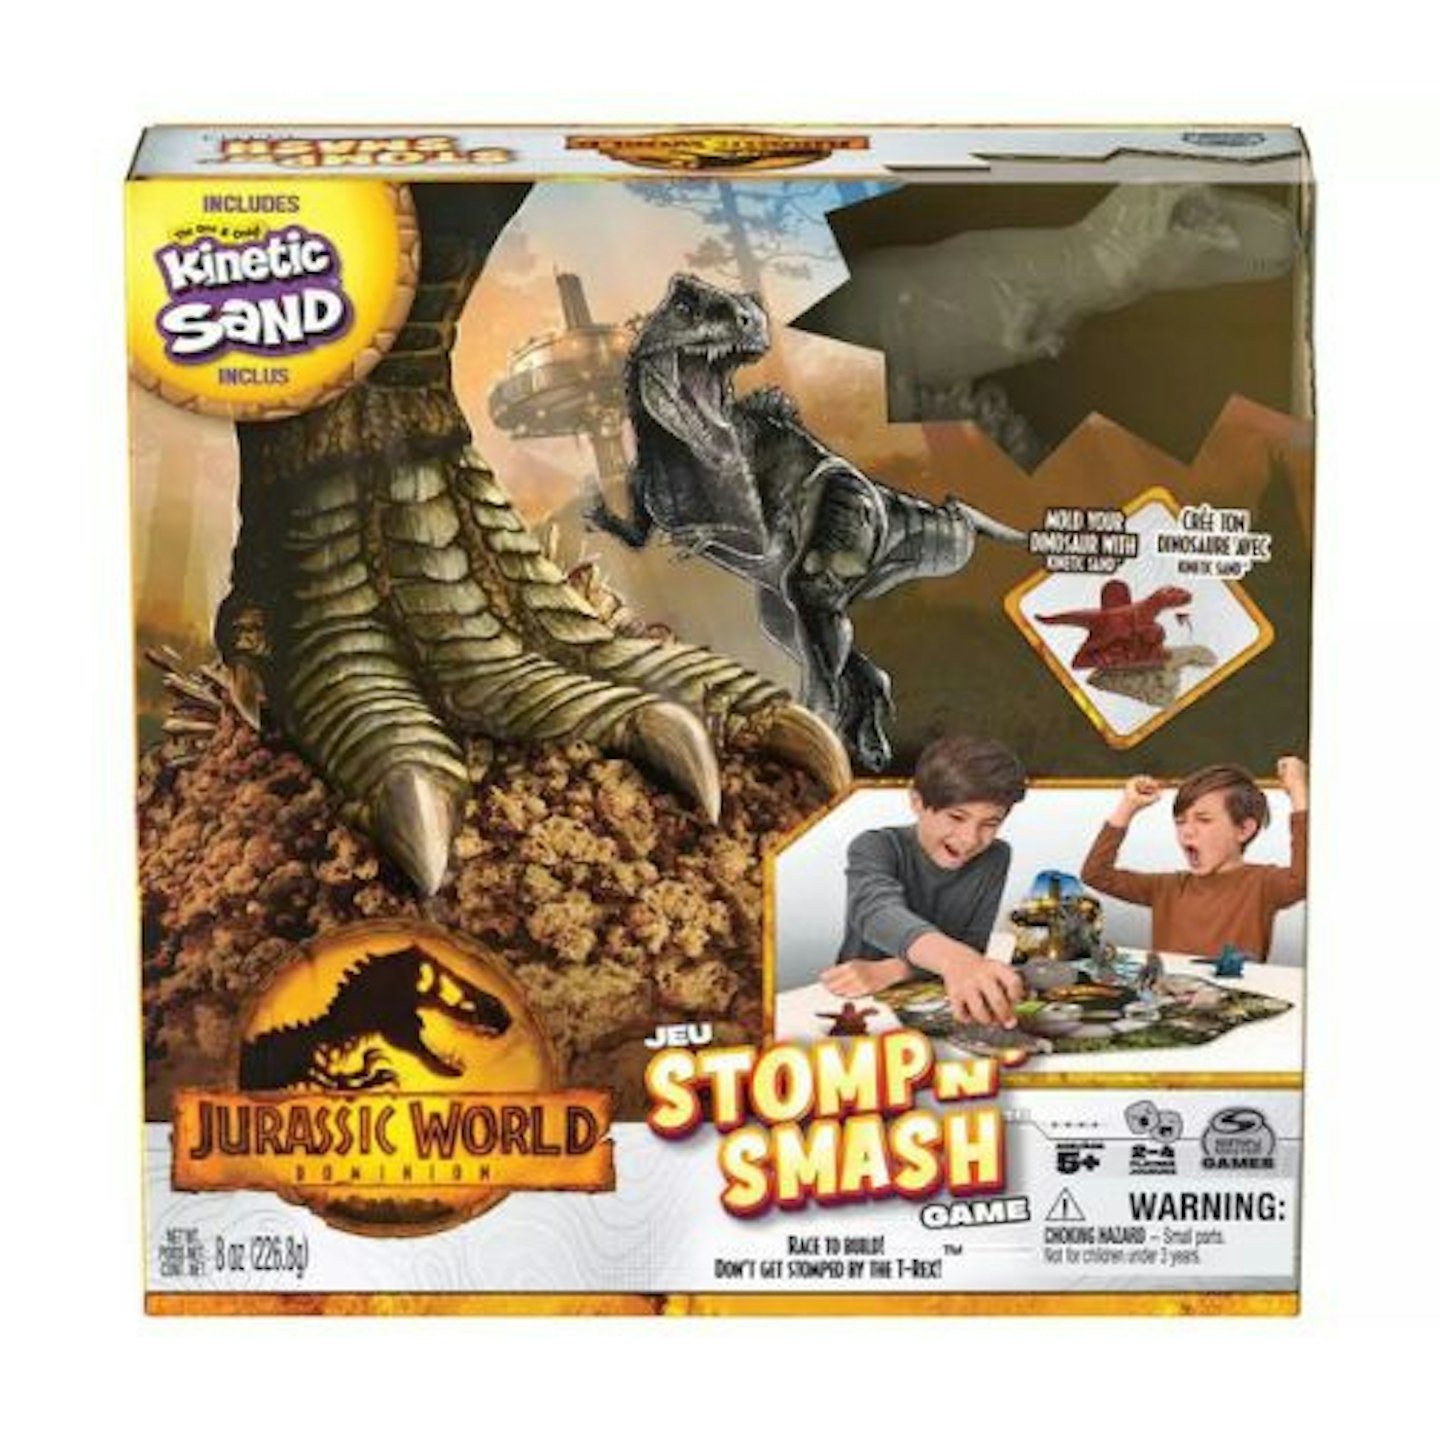 Jurassic World Dominion Stop N' Smash Board Game